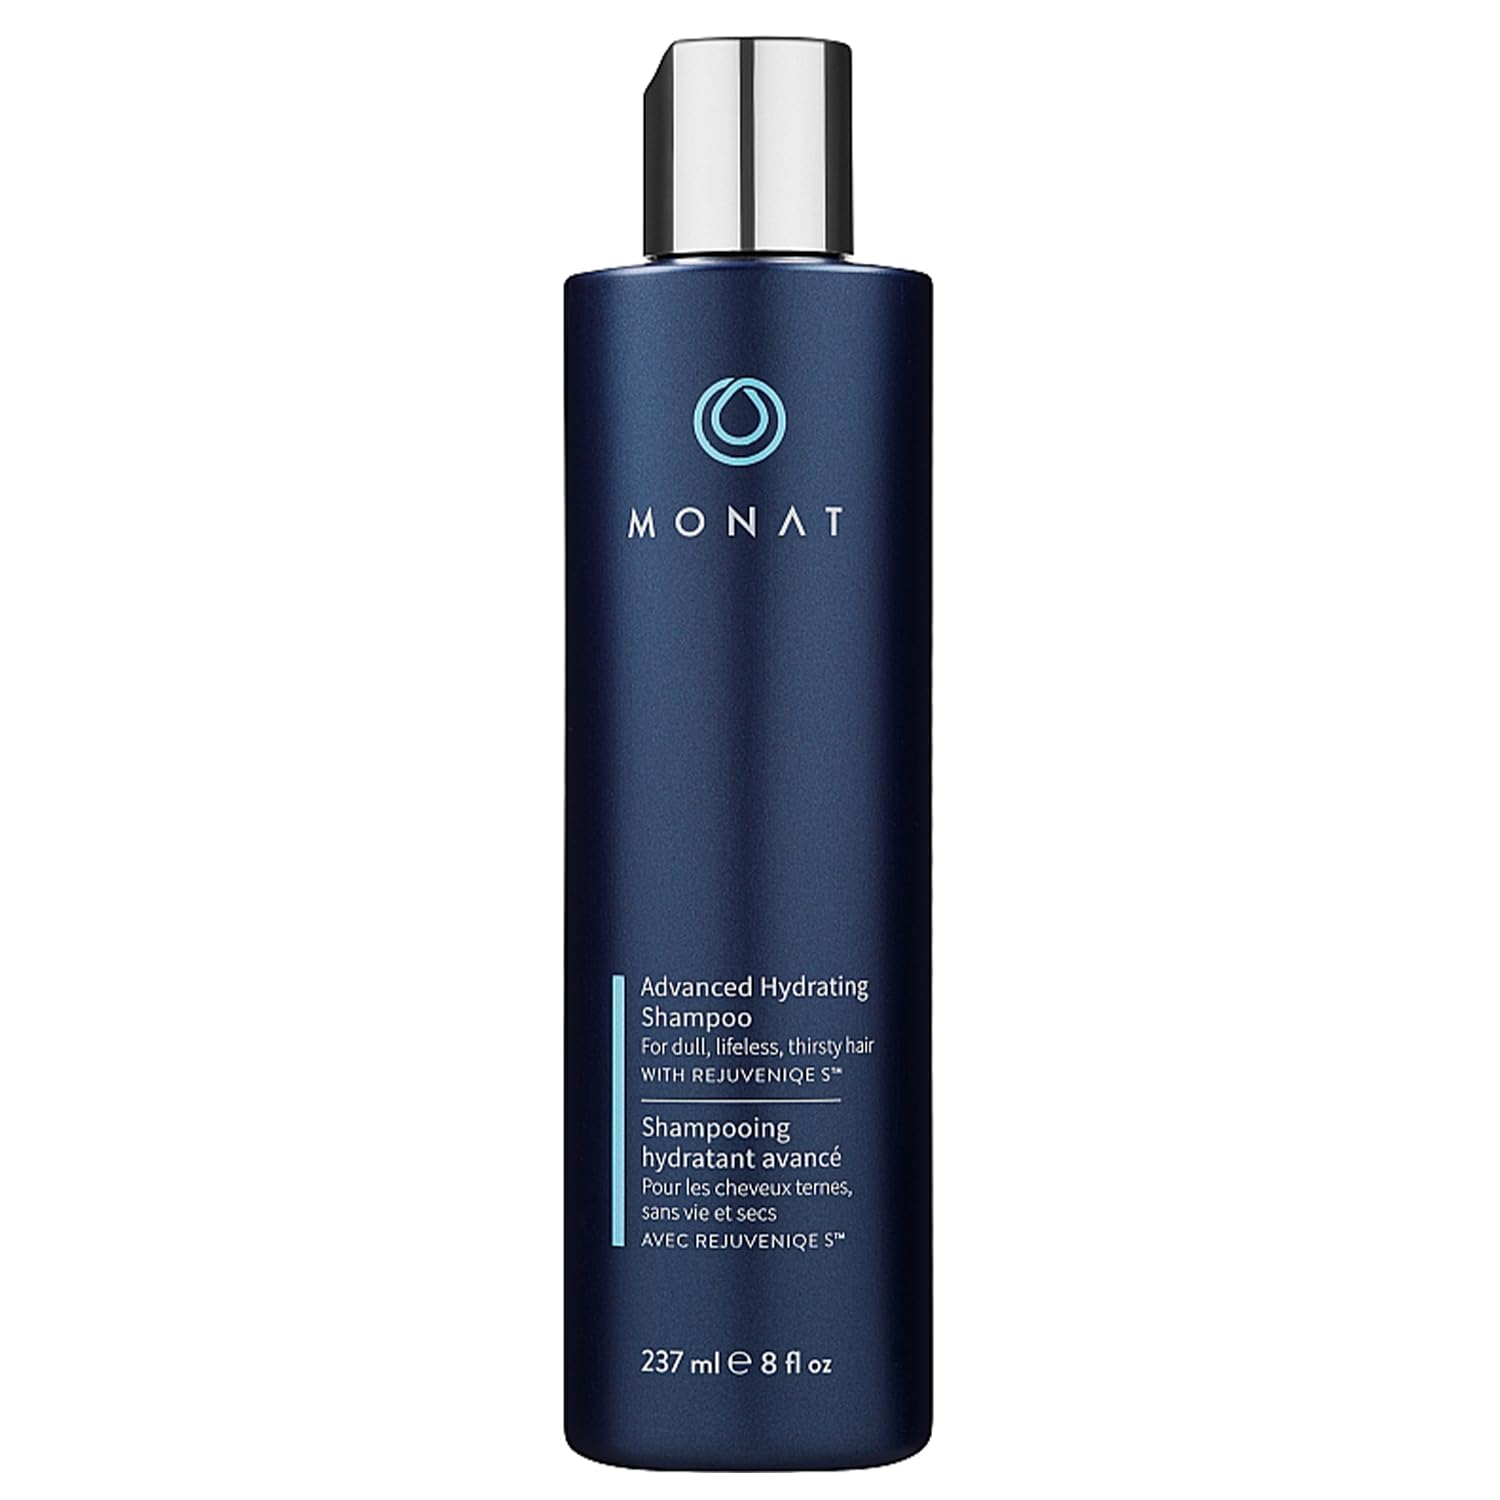 MONAT Advanced Hydrating Shampoo Infused with Rejuveniqe S - Lightweight Hair Shampoo/Moisturizing Shampoo That Nourishes Fine to Medium Hair - Net Wt. 237 ml / 8 fl. oz